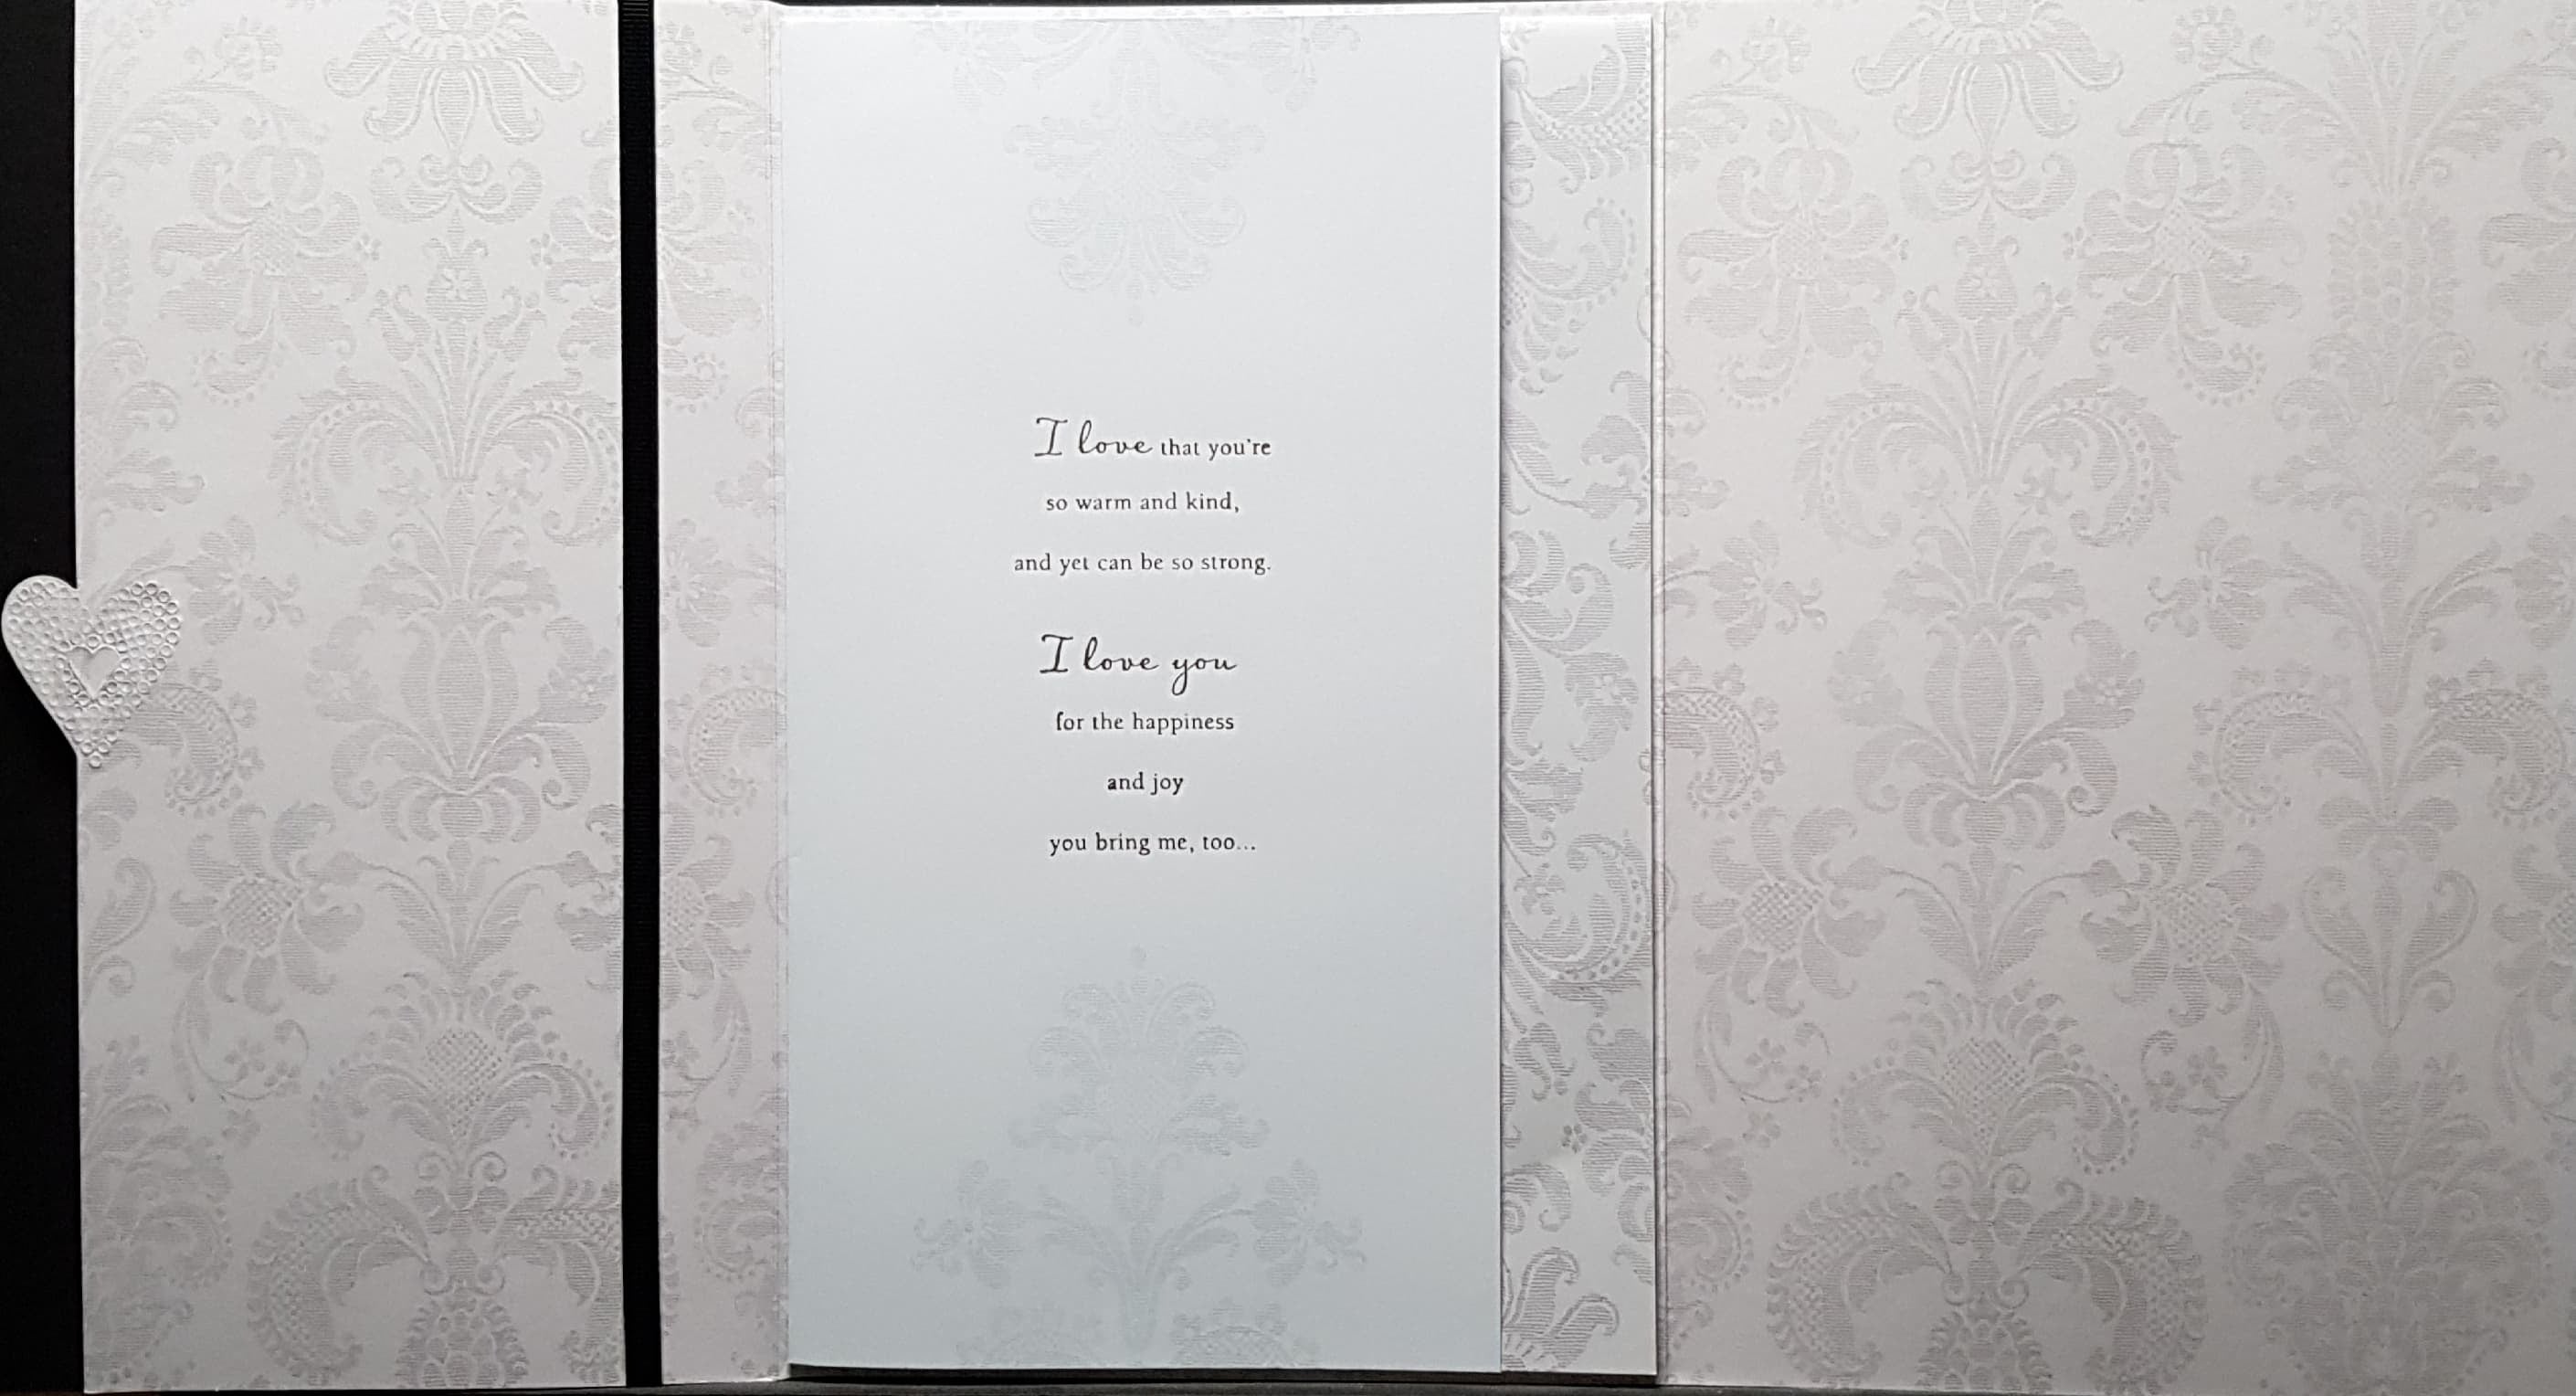 Birthday Card - Man I Love / Elegant Gold Shiny Heart & A Black Ribbon